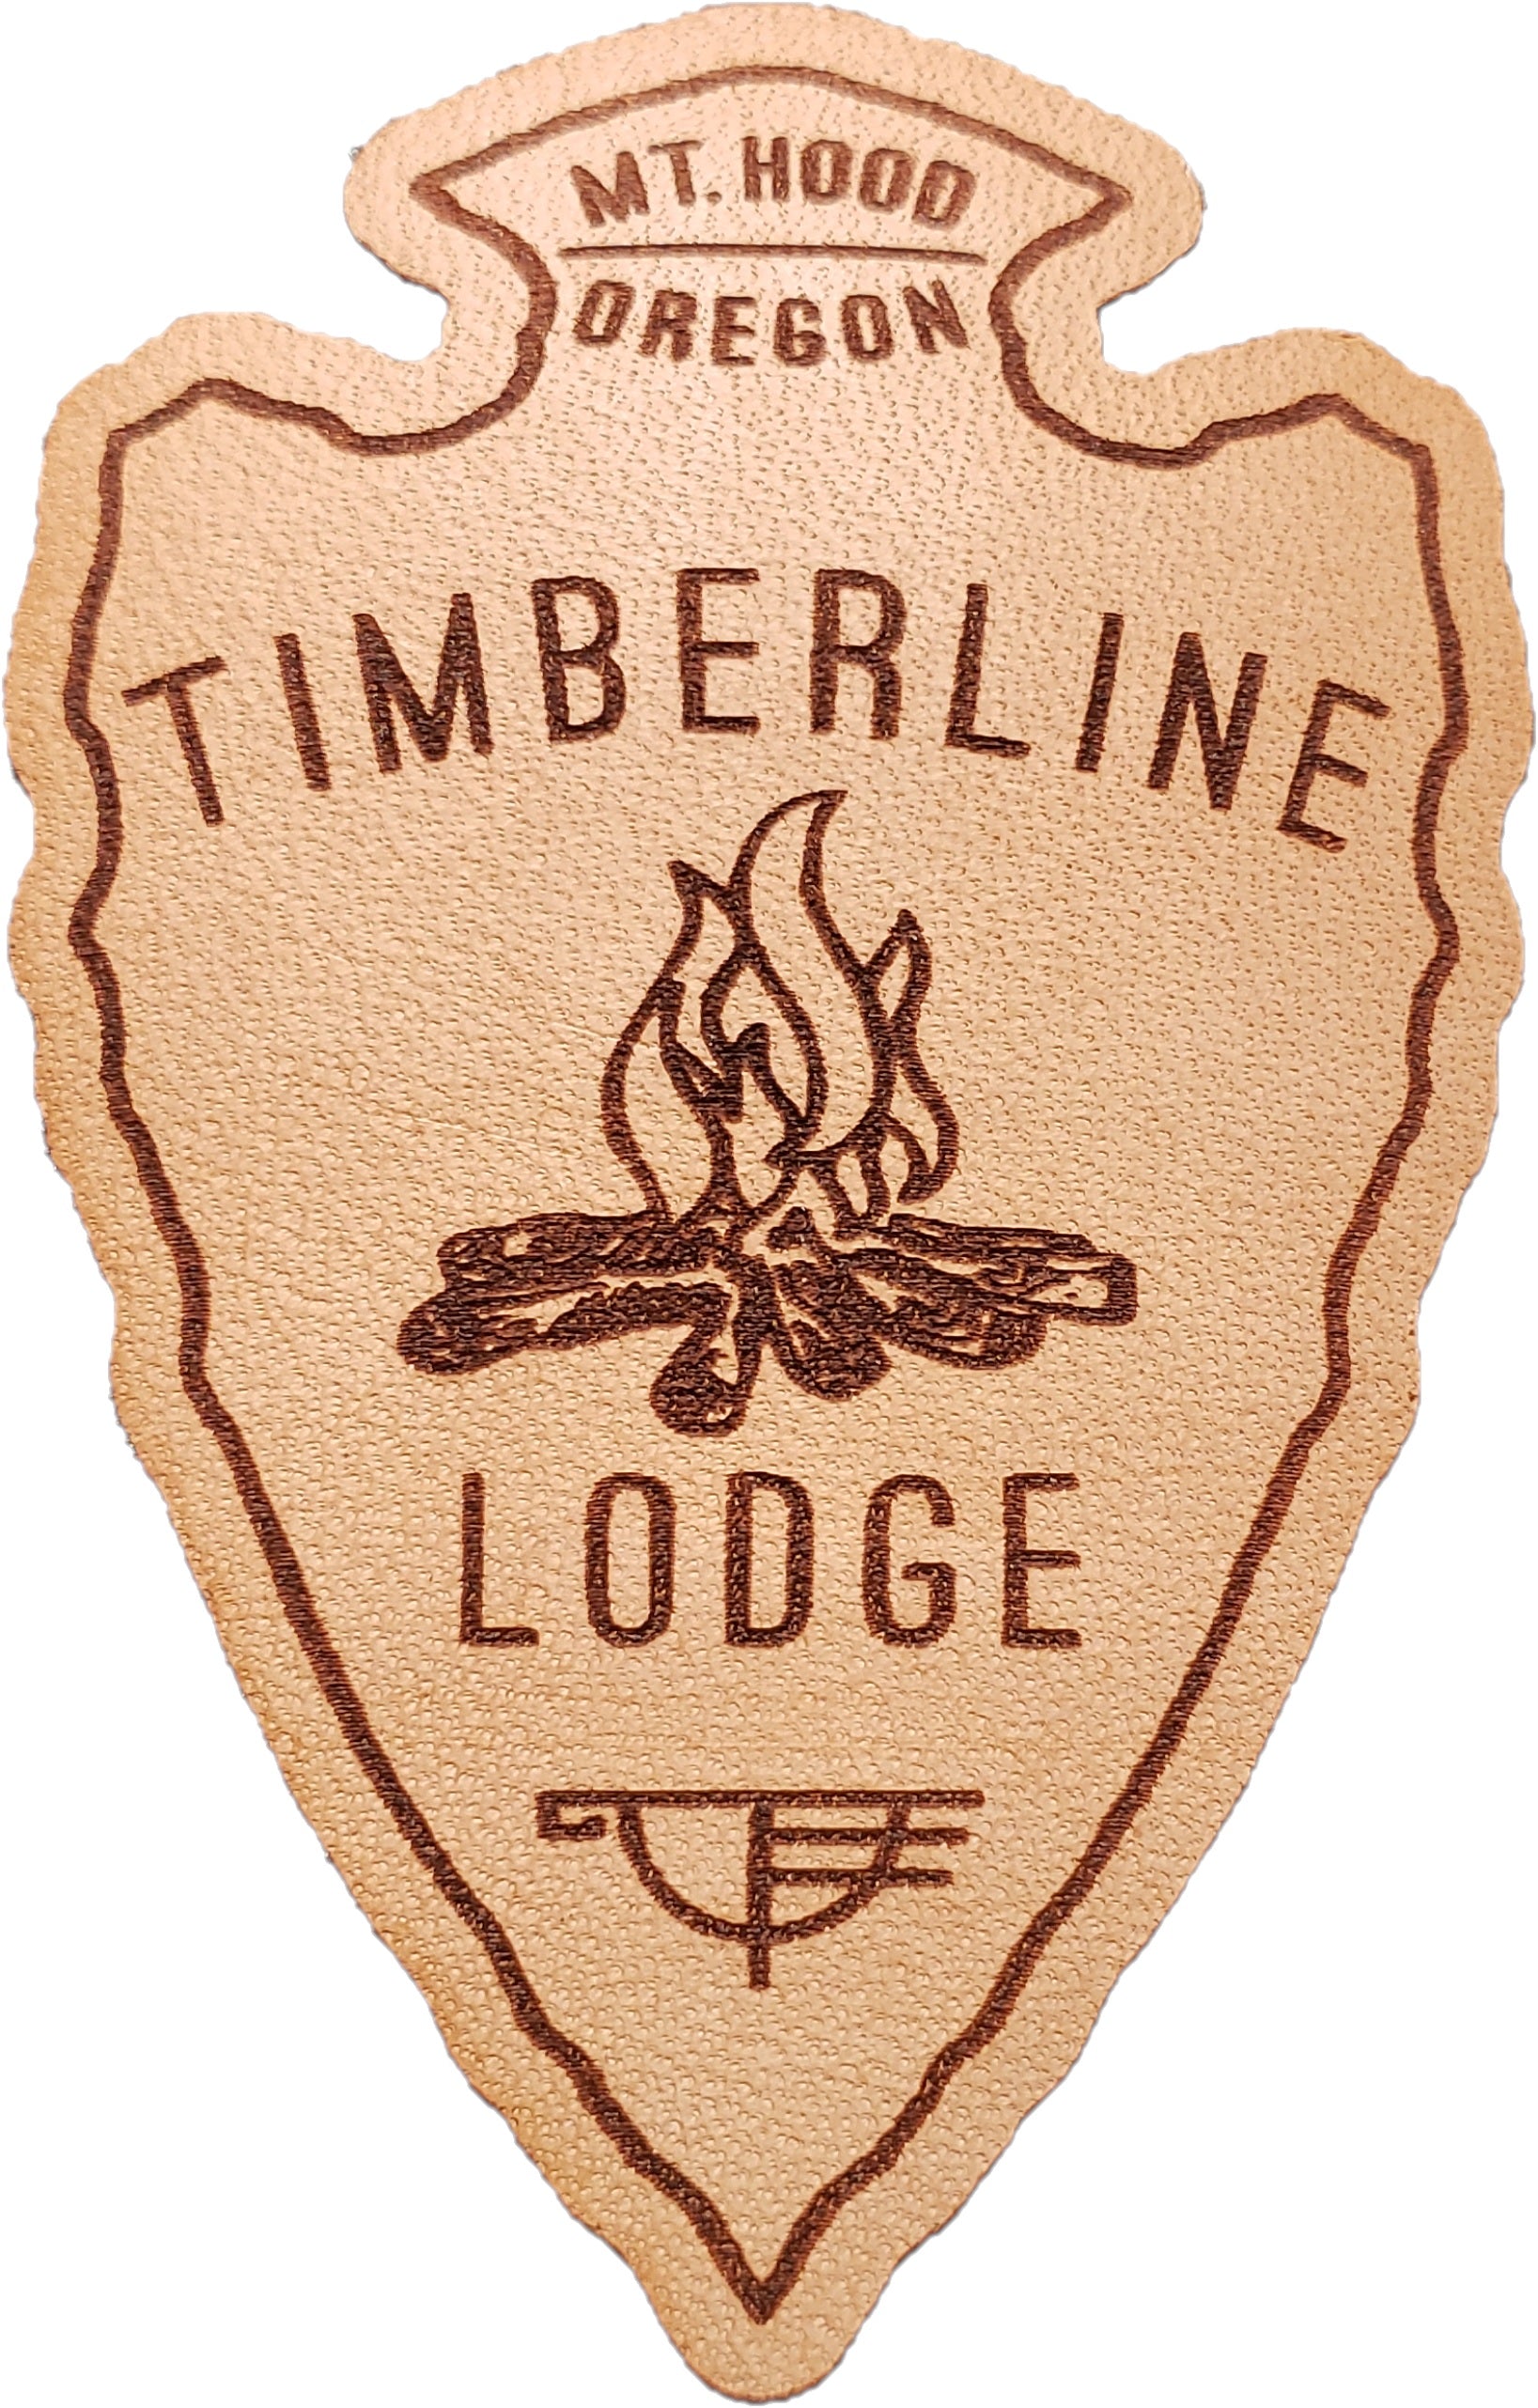 timberline lodge logo